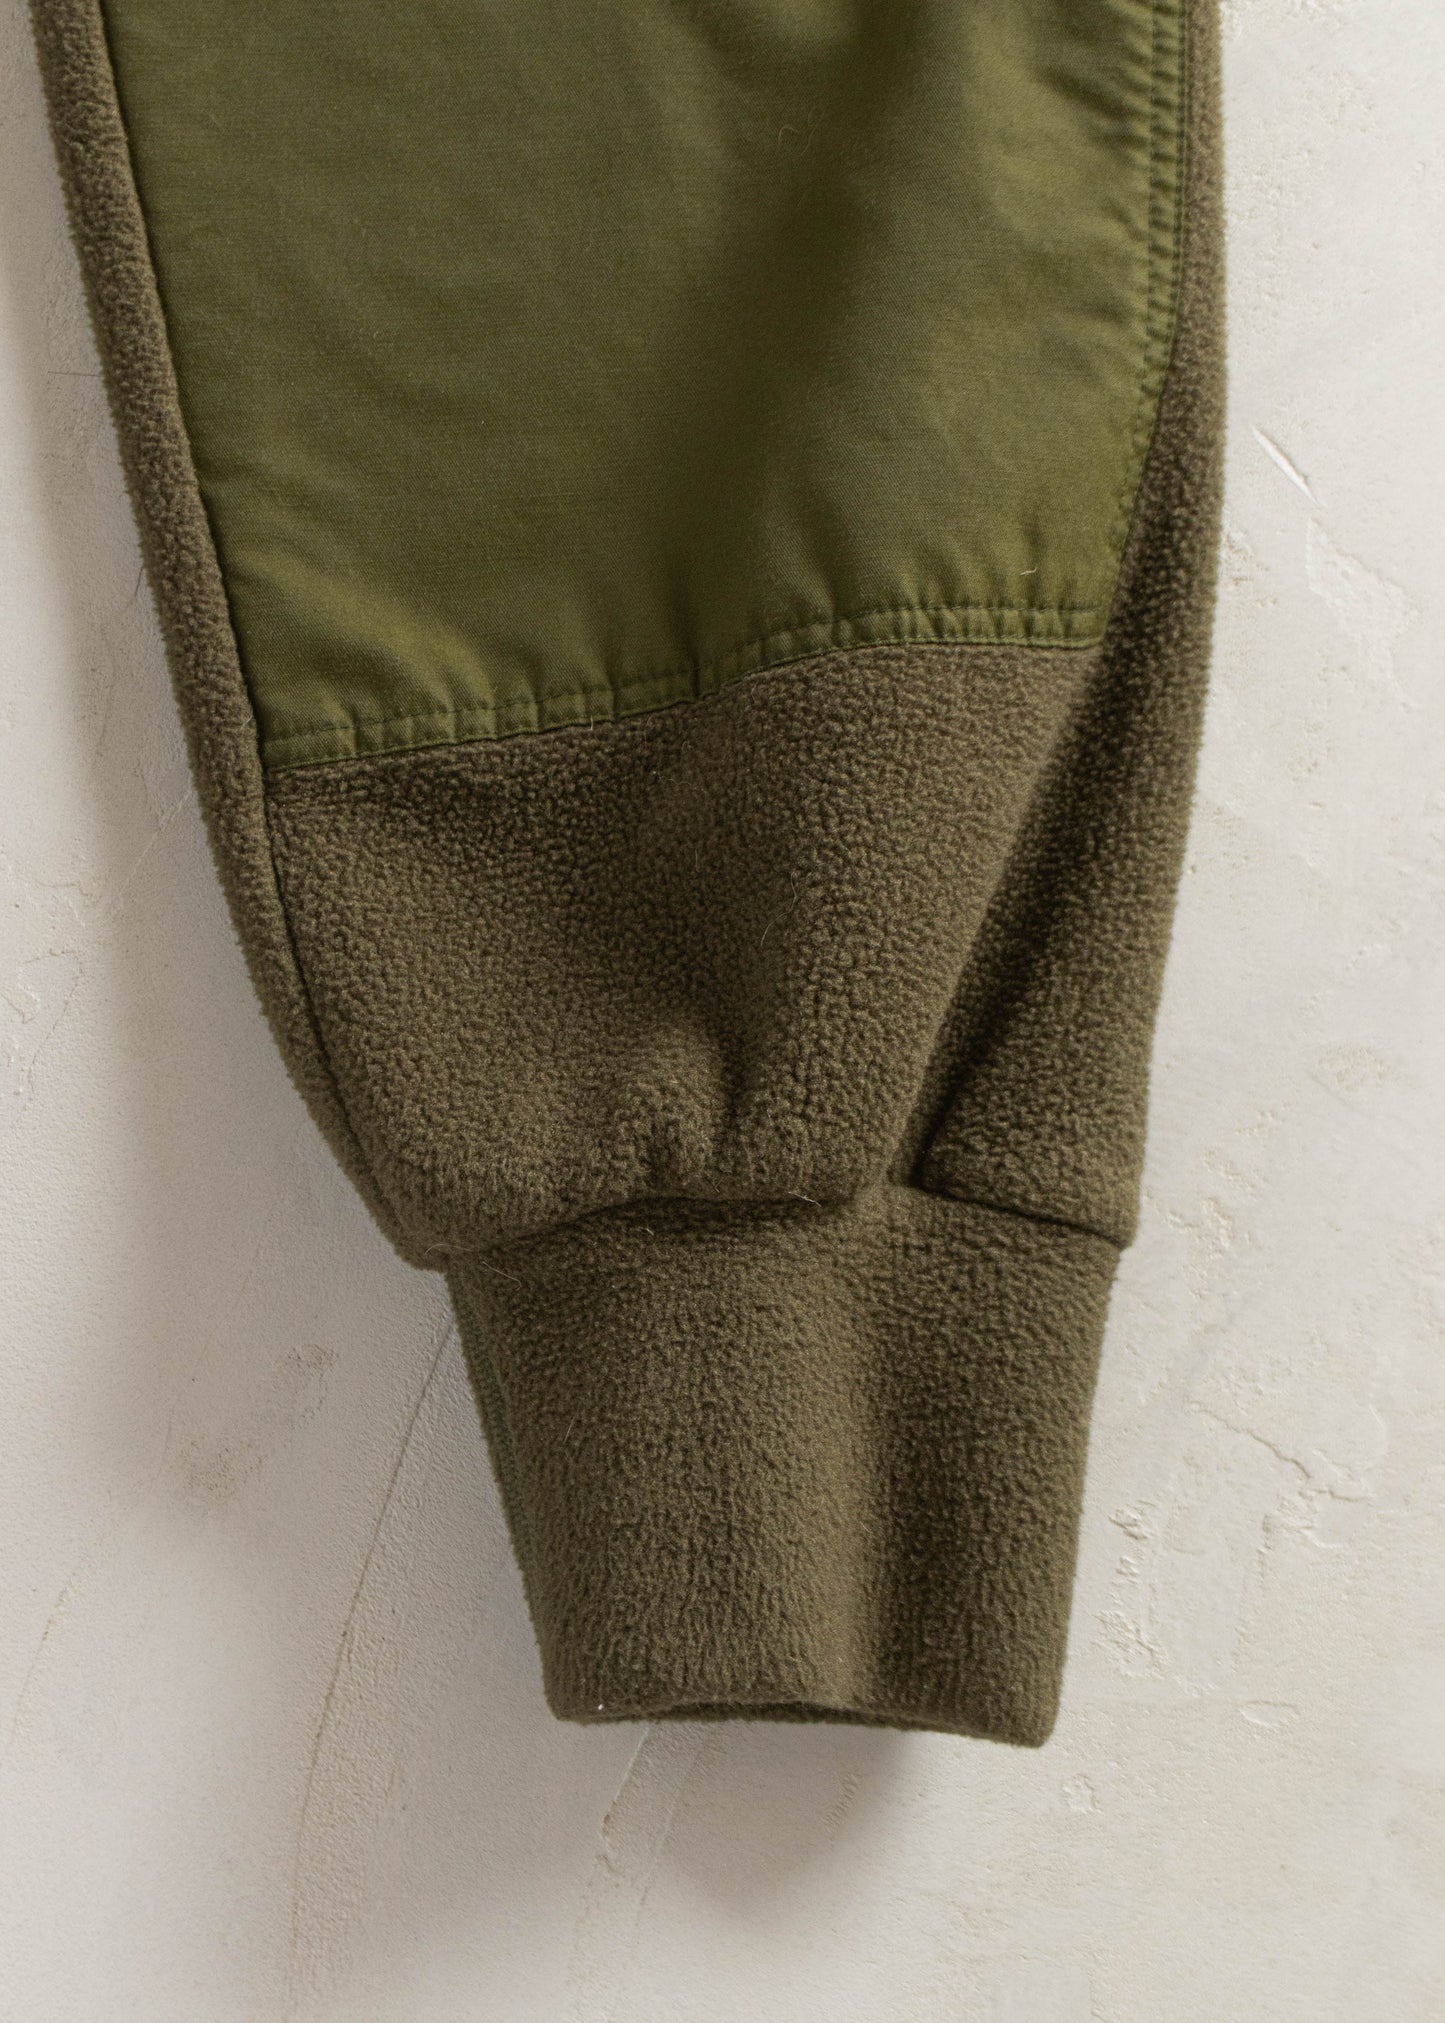 1990s Military Combat Polar Fleece Sweatpants Size XS/S